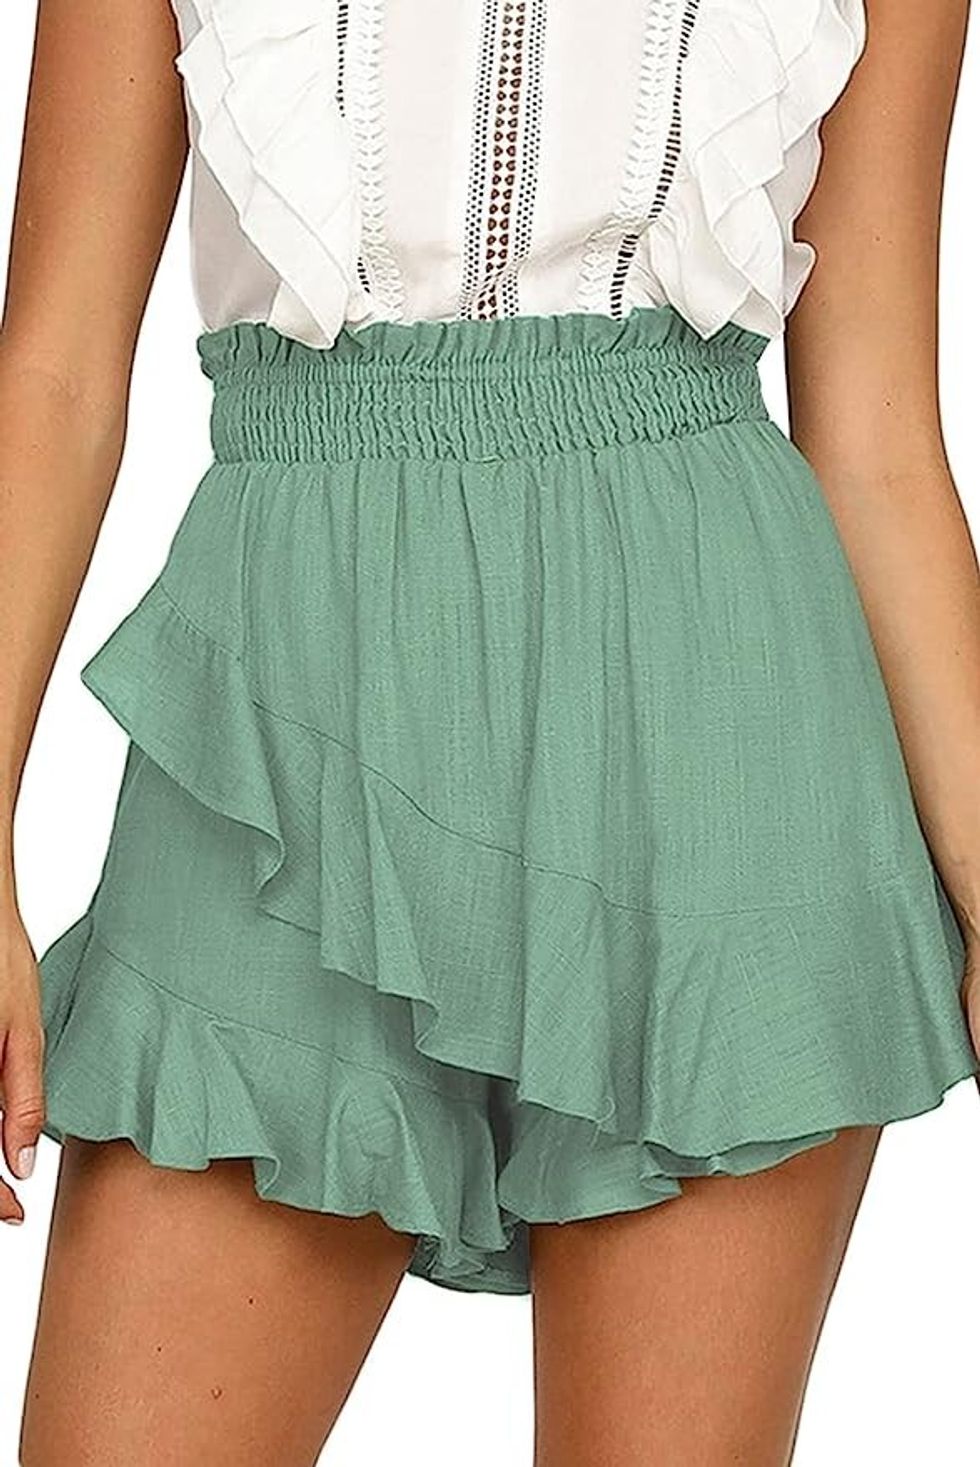 LETSRUNWILD Women's Mini Skirt Skort Ruffle Trendy Beach Cotton High Waisted Flowy Wrap Shorts for Summer